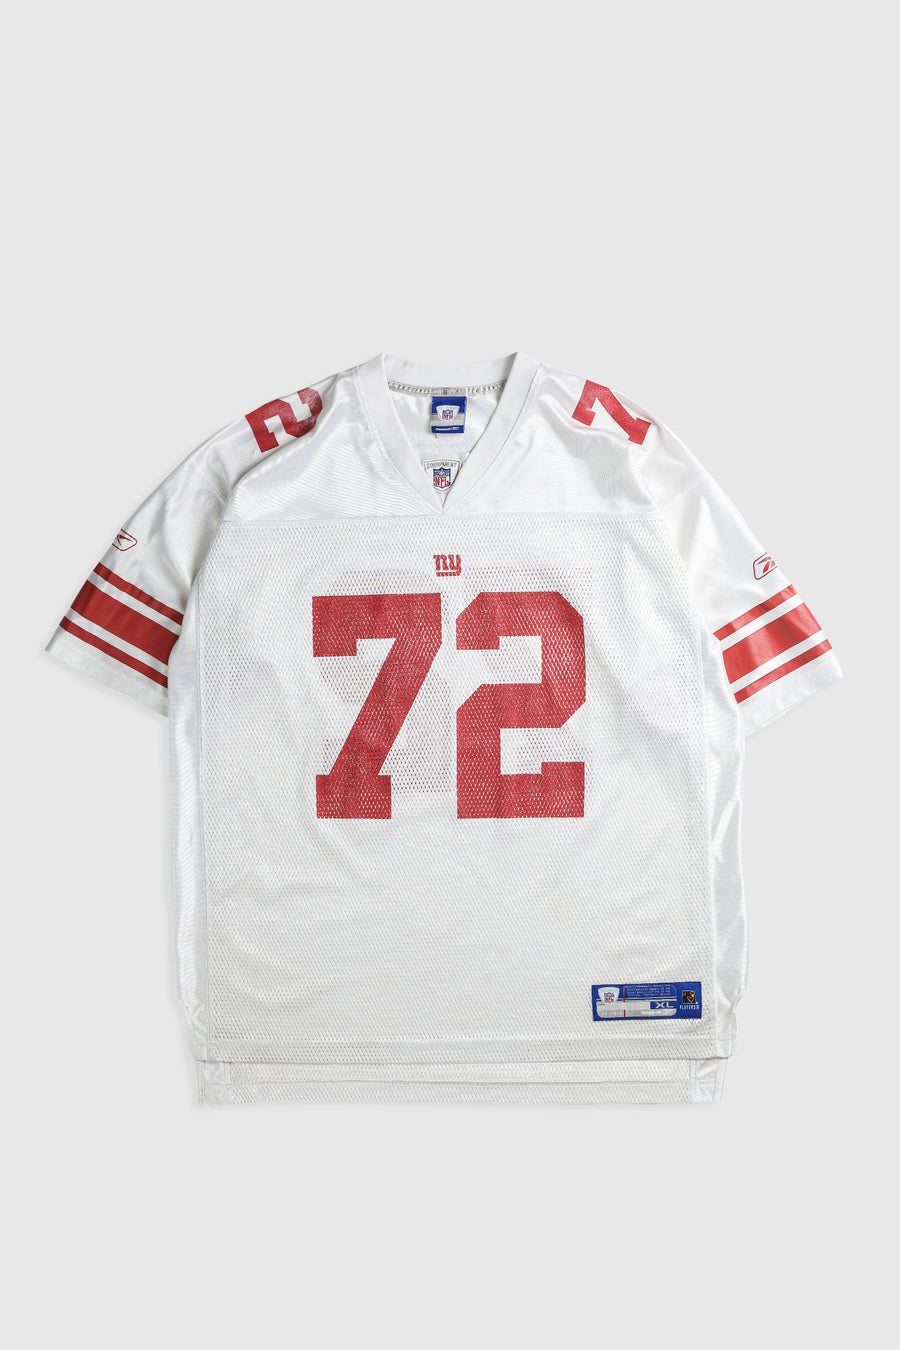 Vintage NFL Giants Jersey - XL